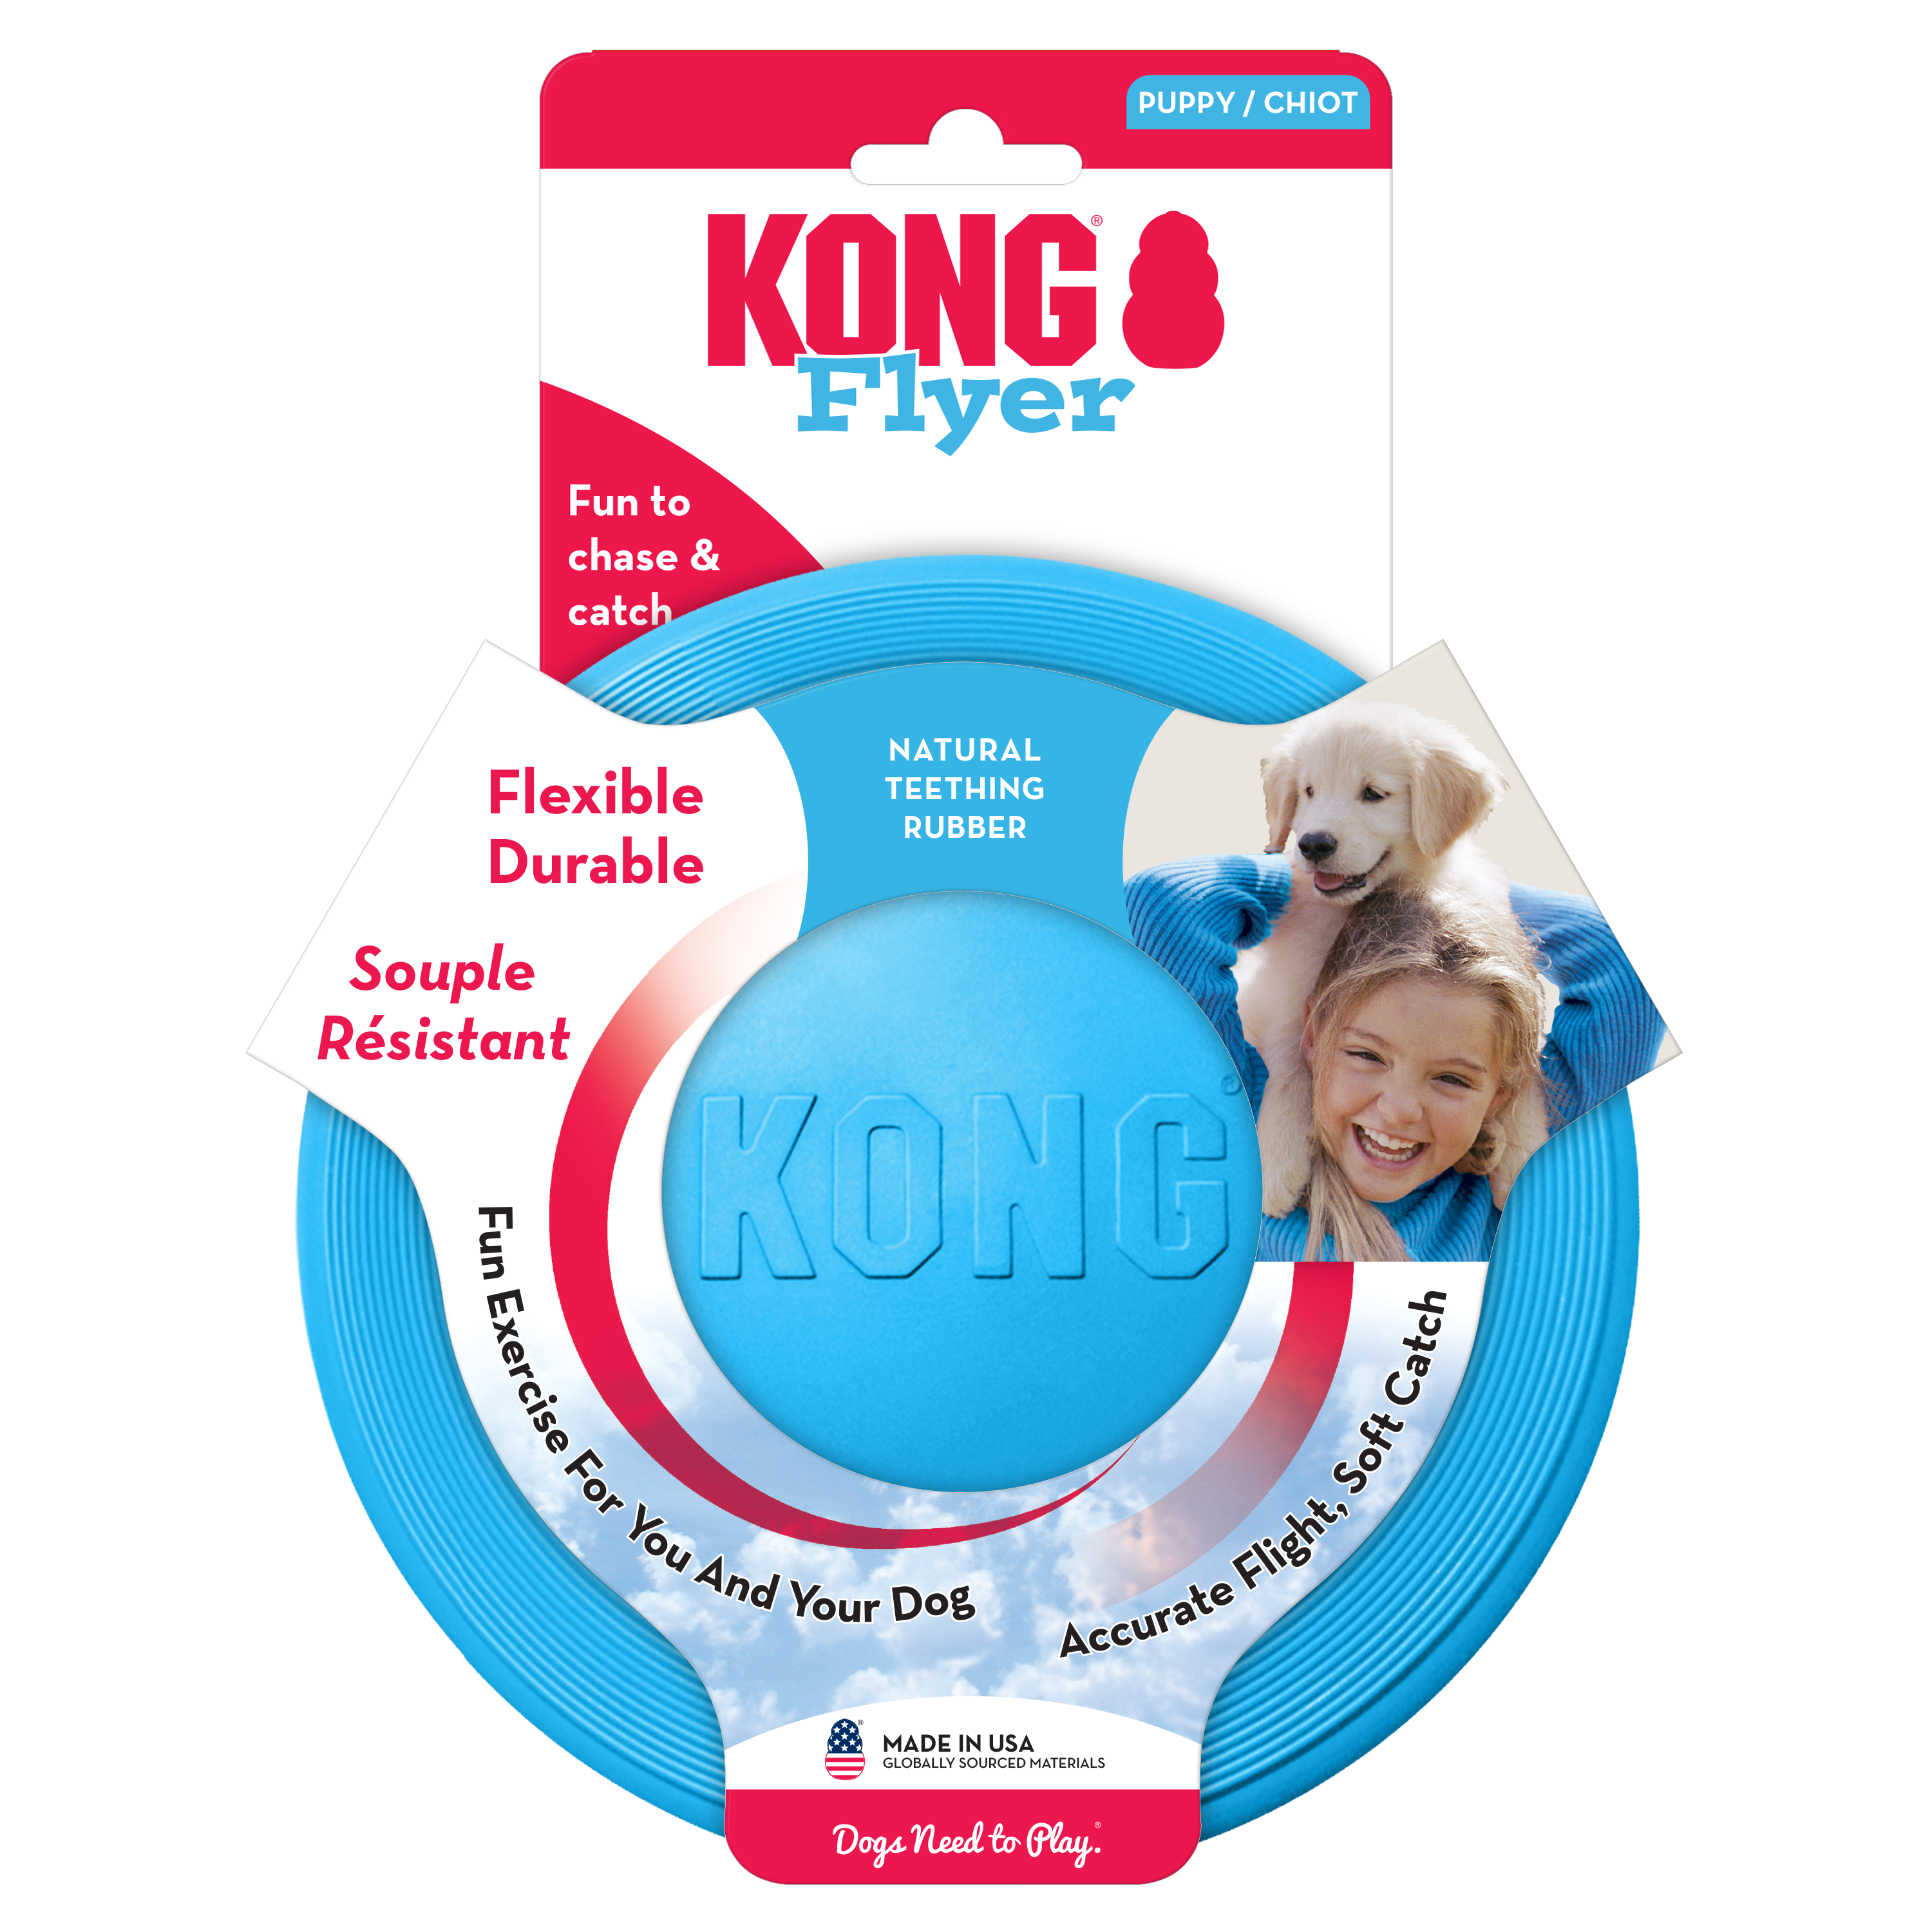 Imagem do produto KONG Puppy Flyer onpack